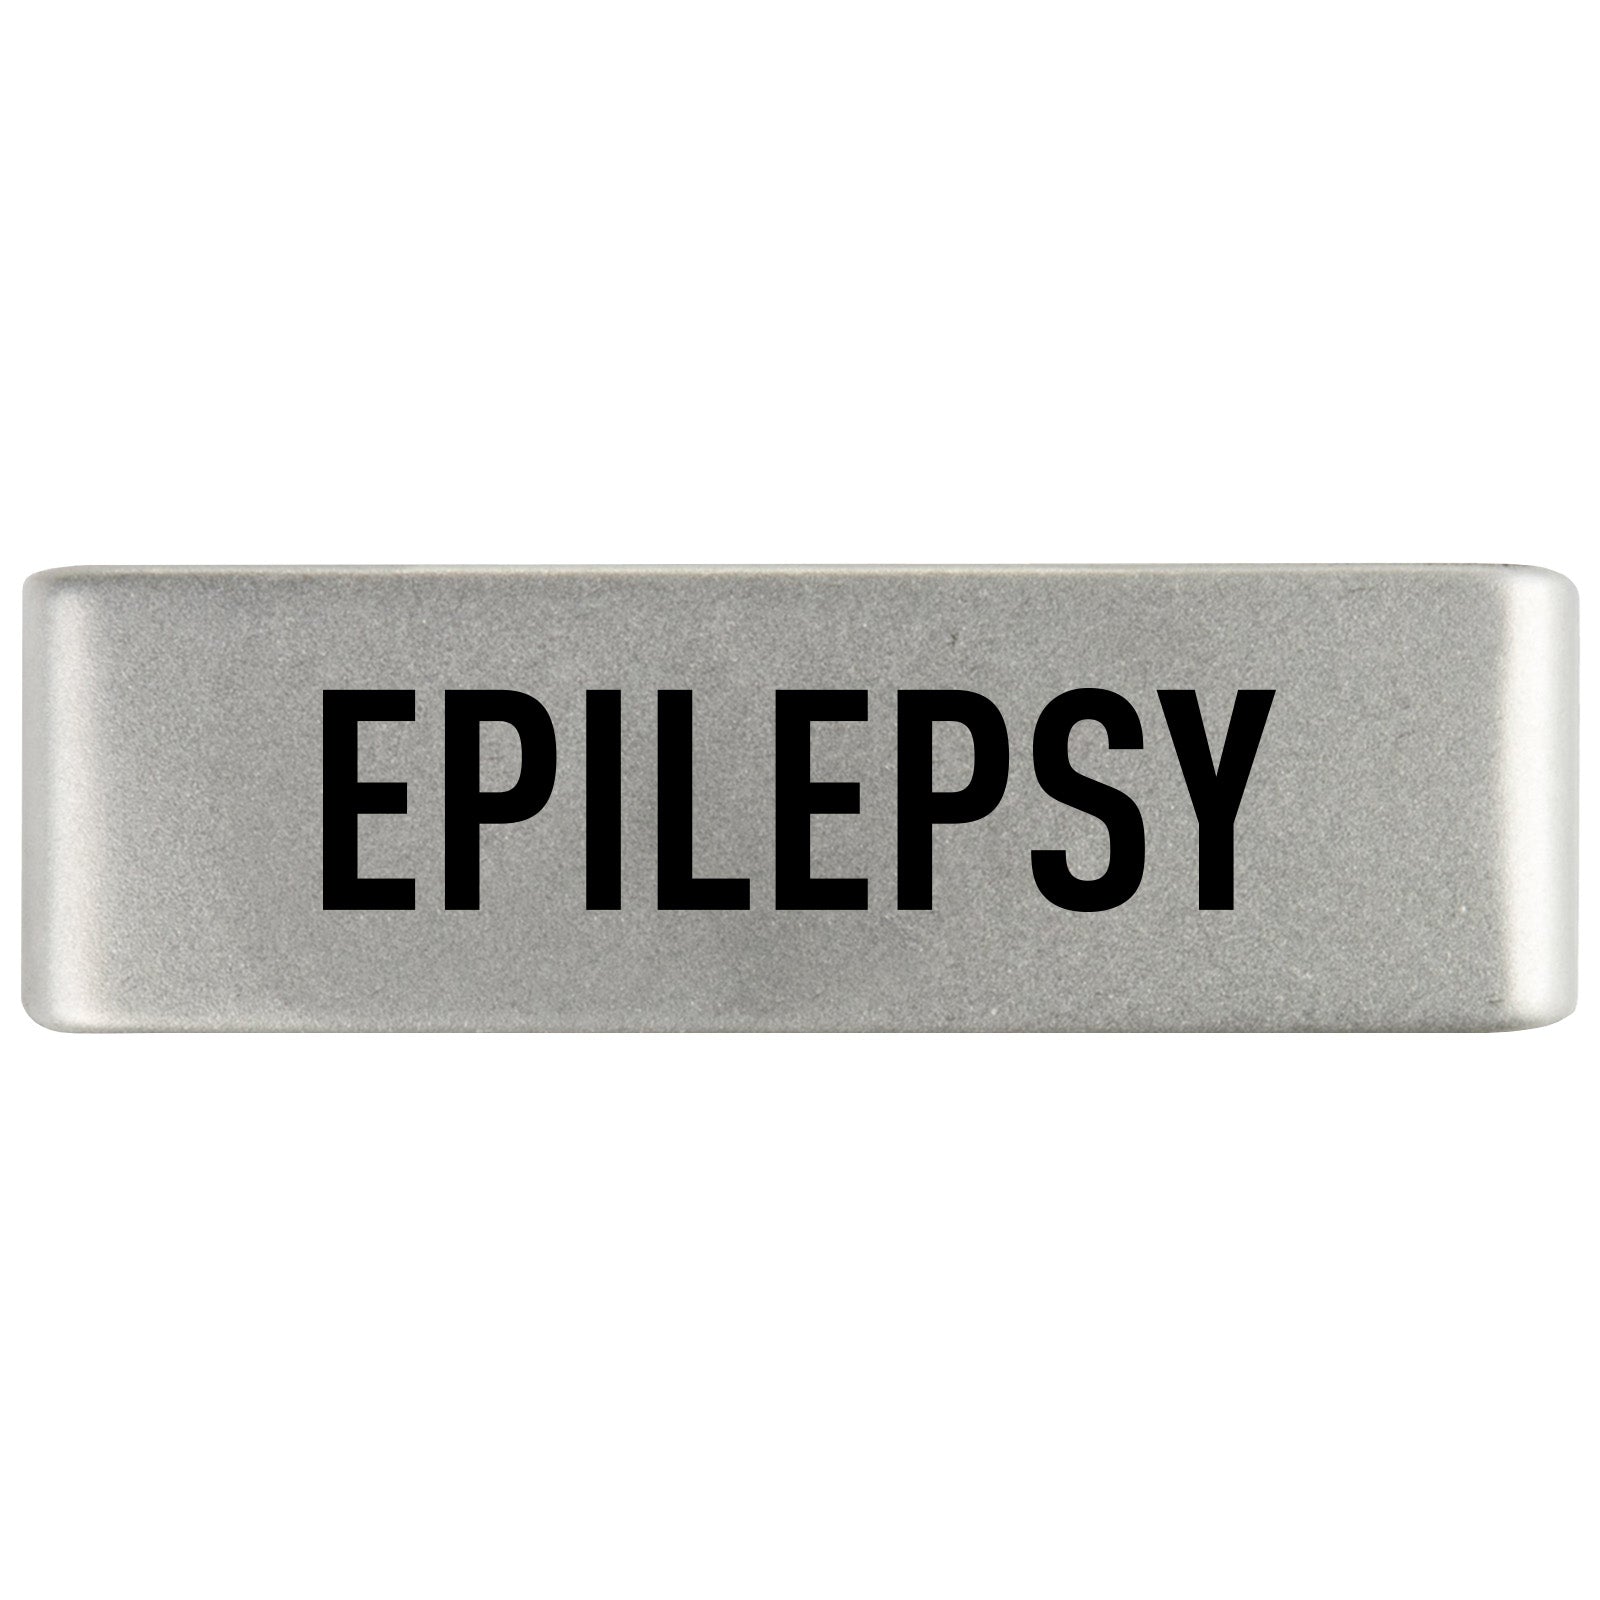 Epilepsy Badge Badge 19mm - ROAD iD